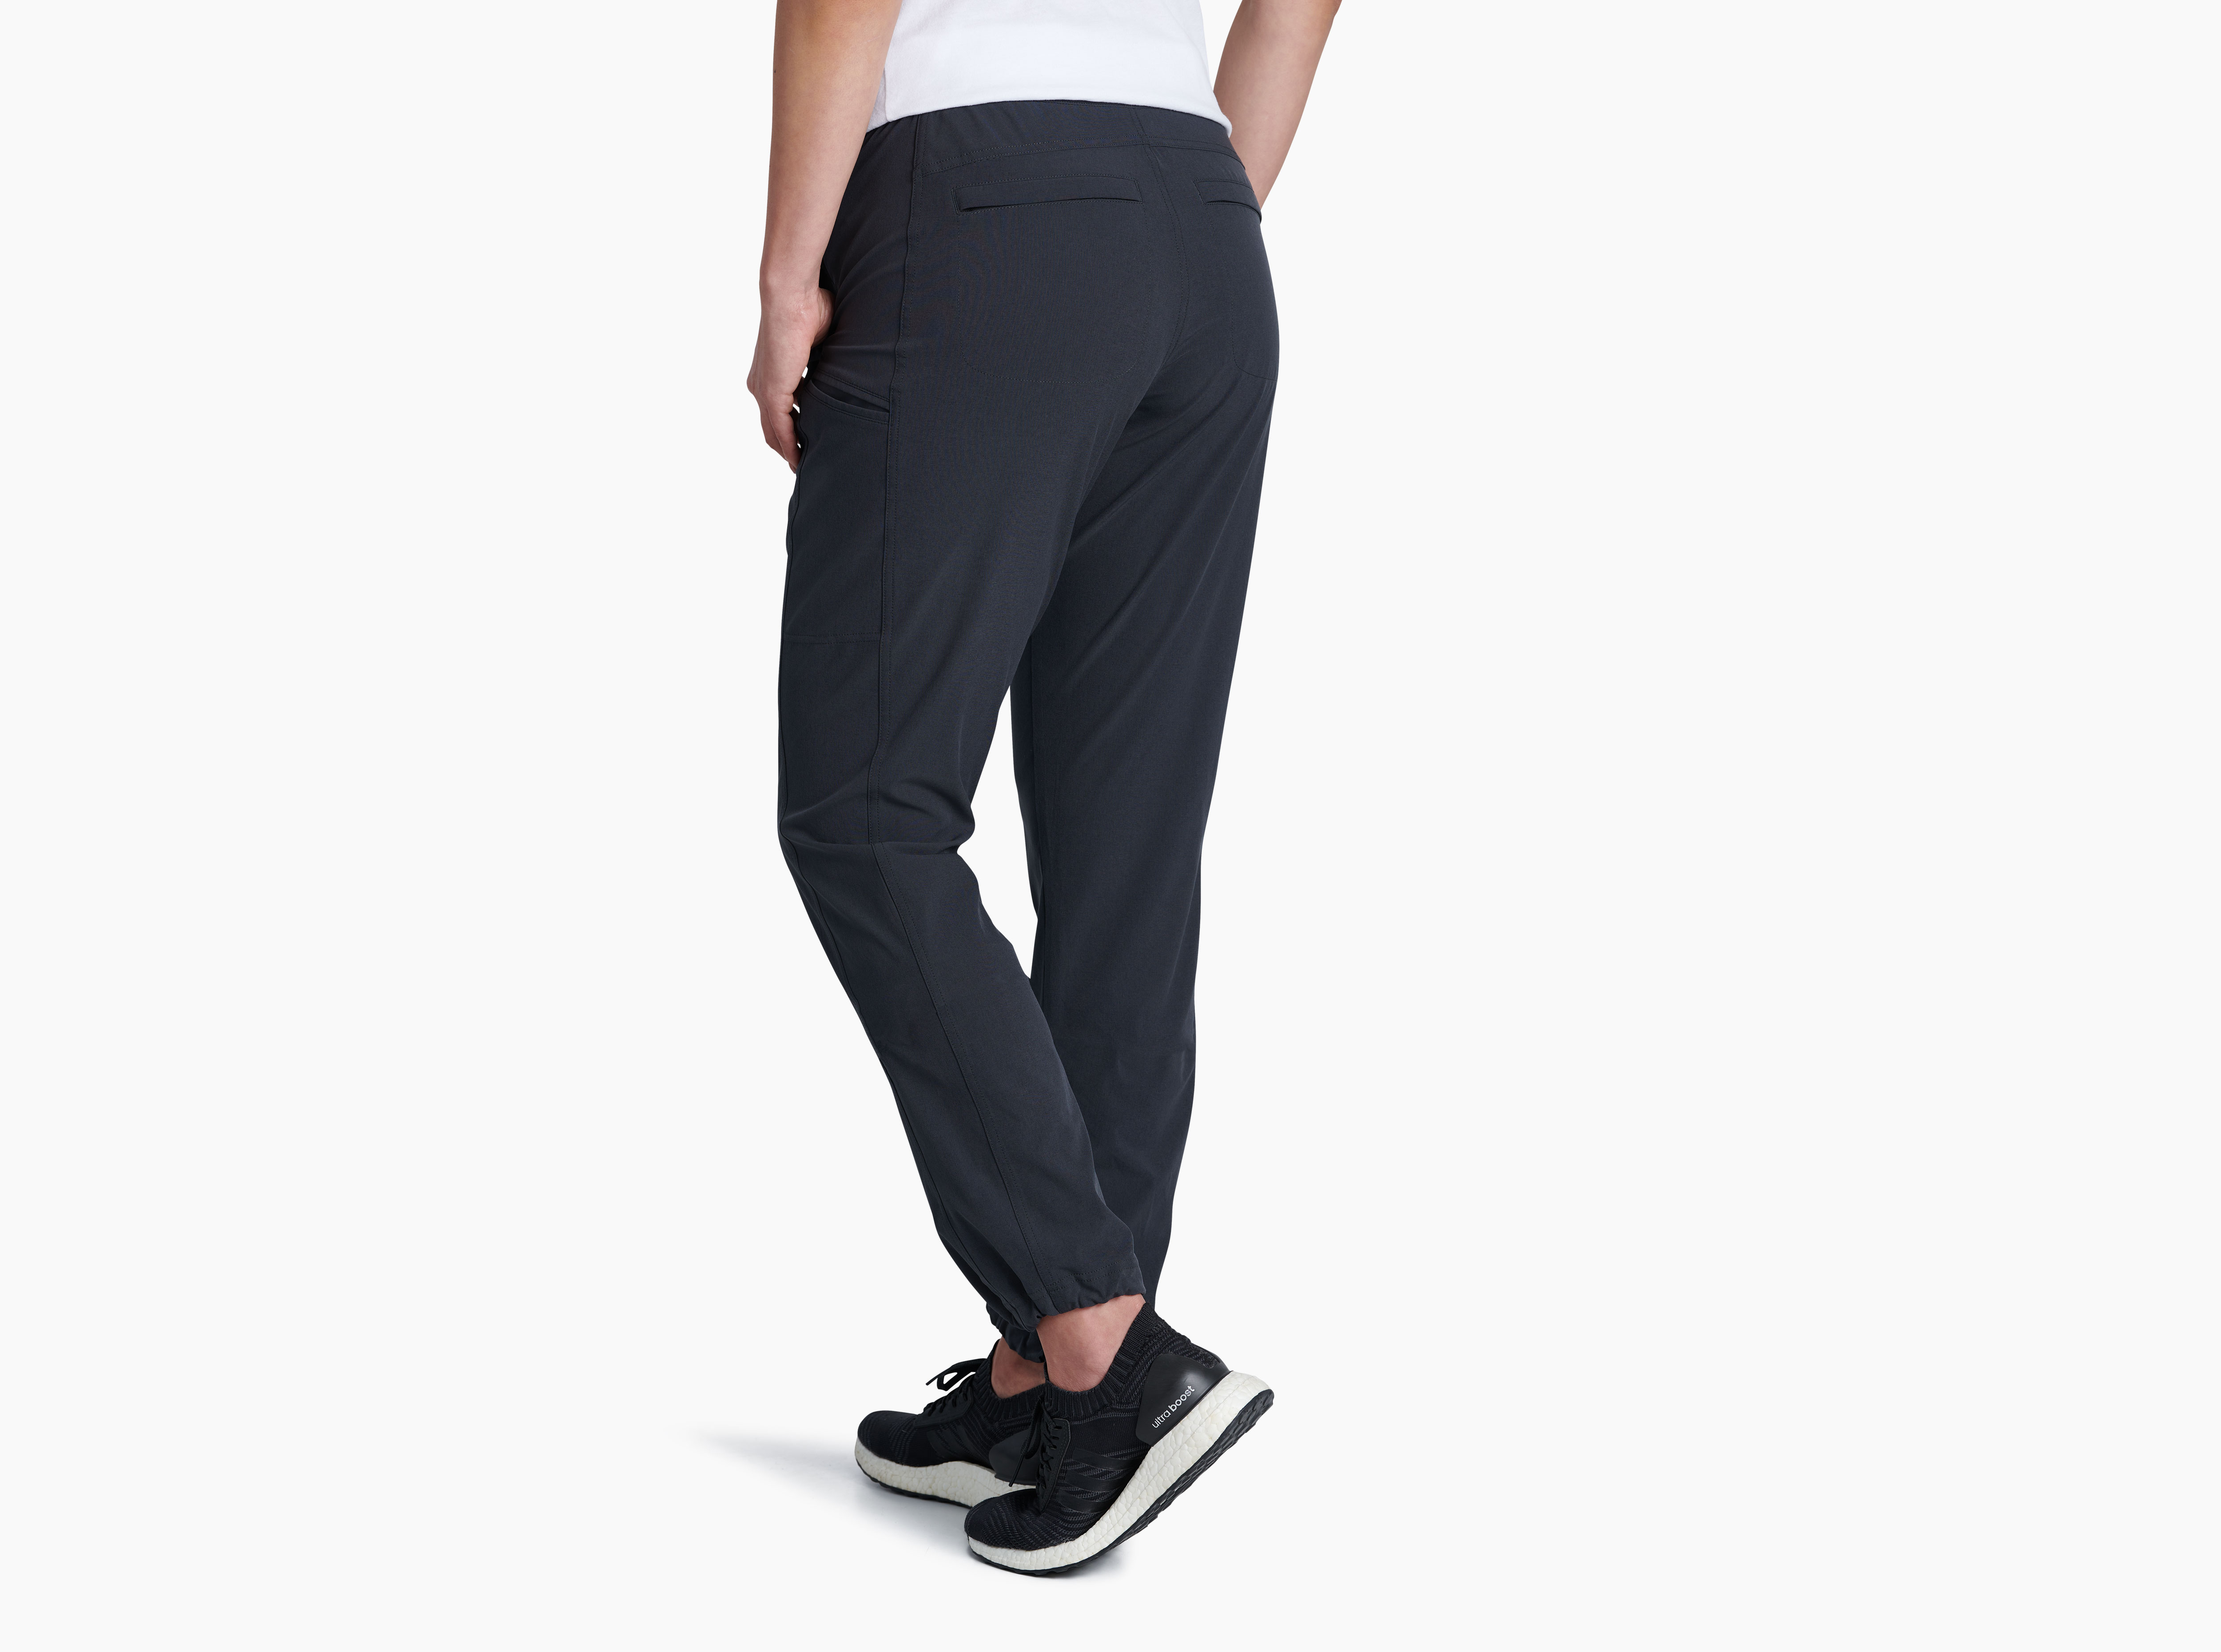 Freeflex™ Dash in Women's Pants